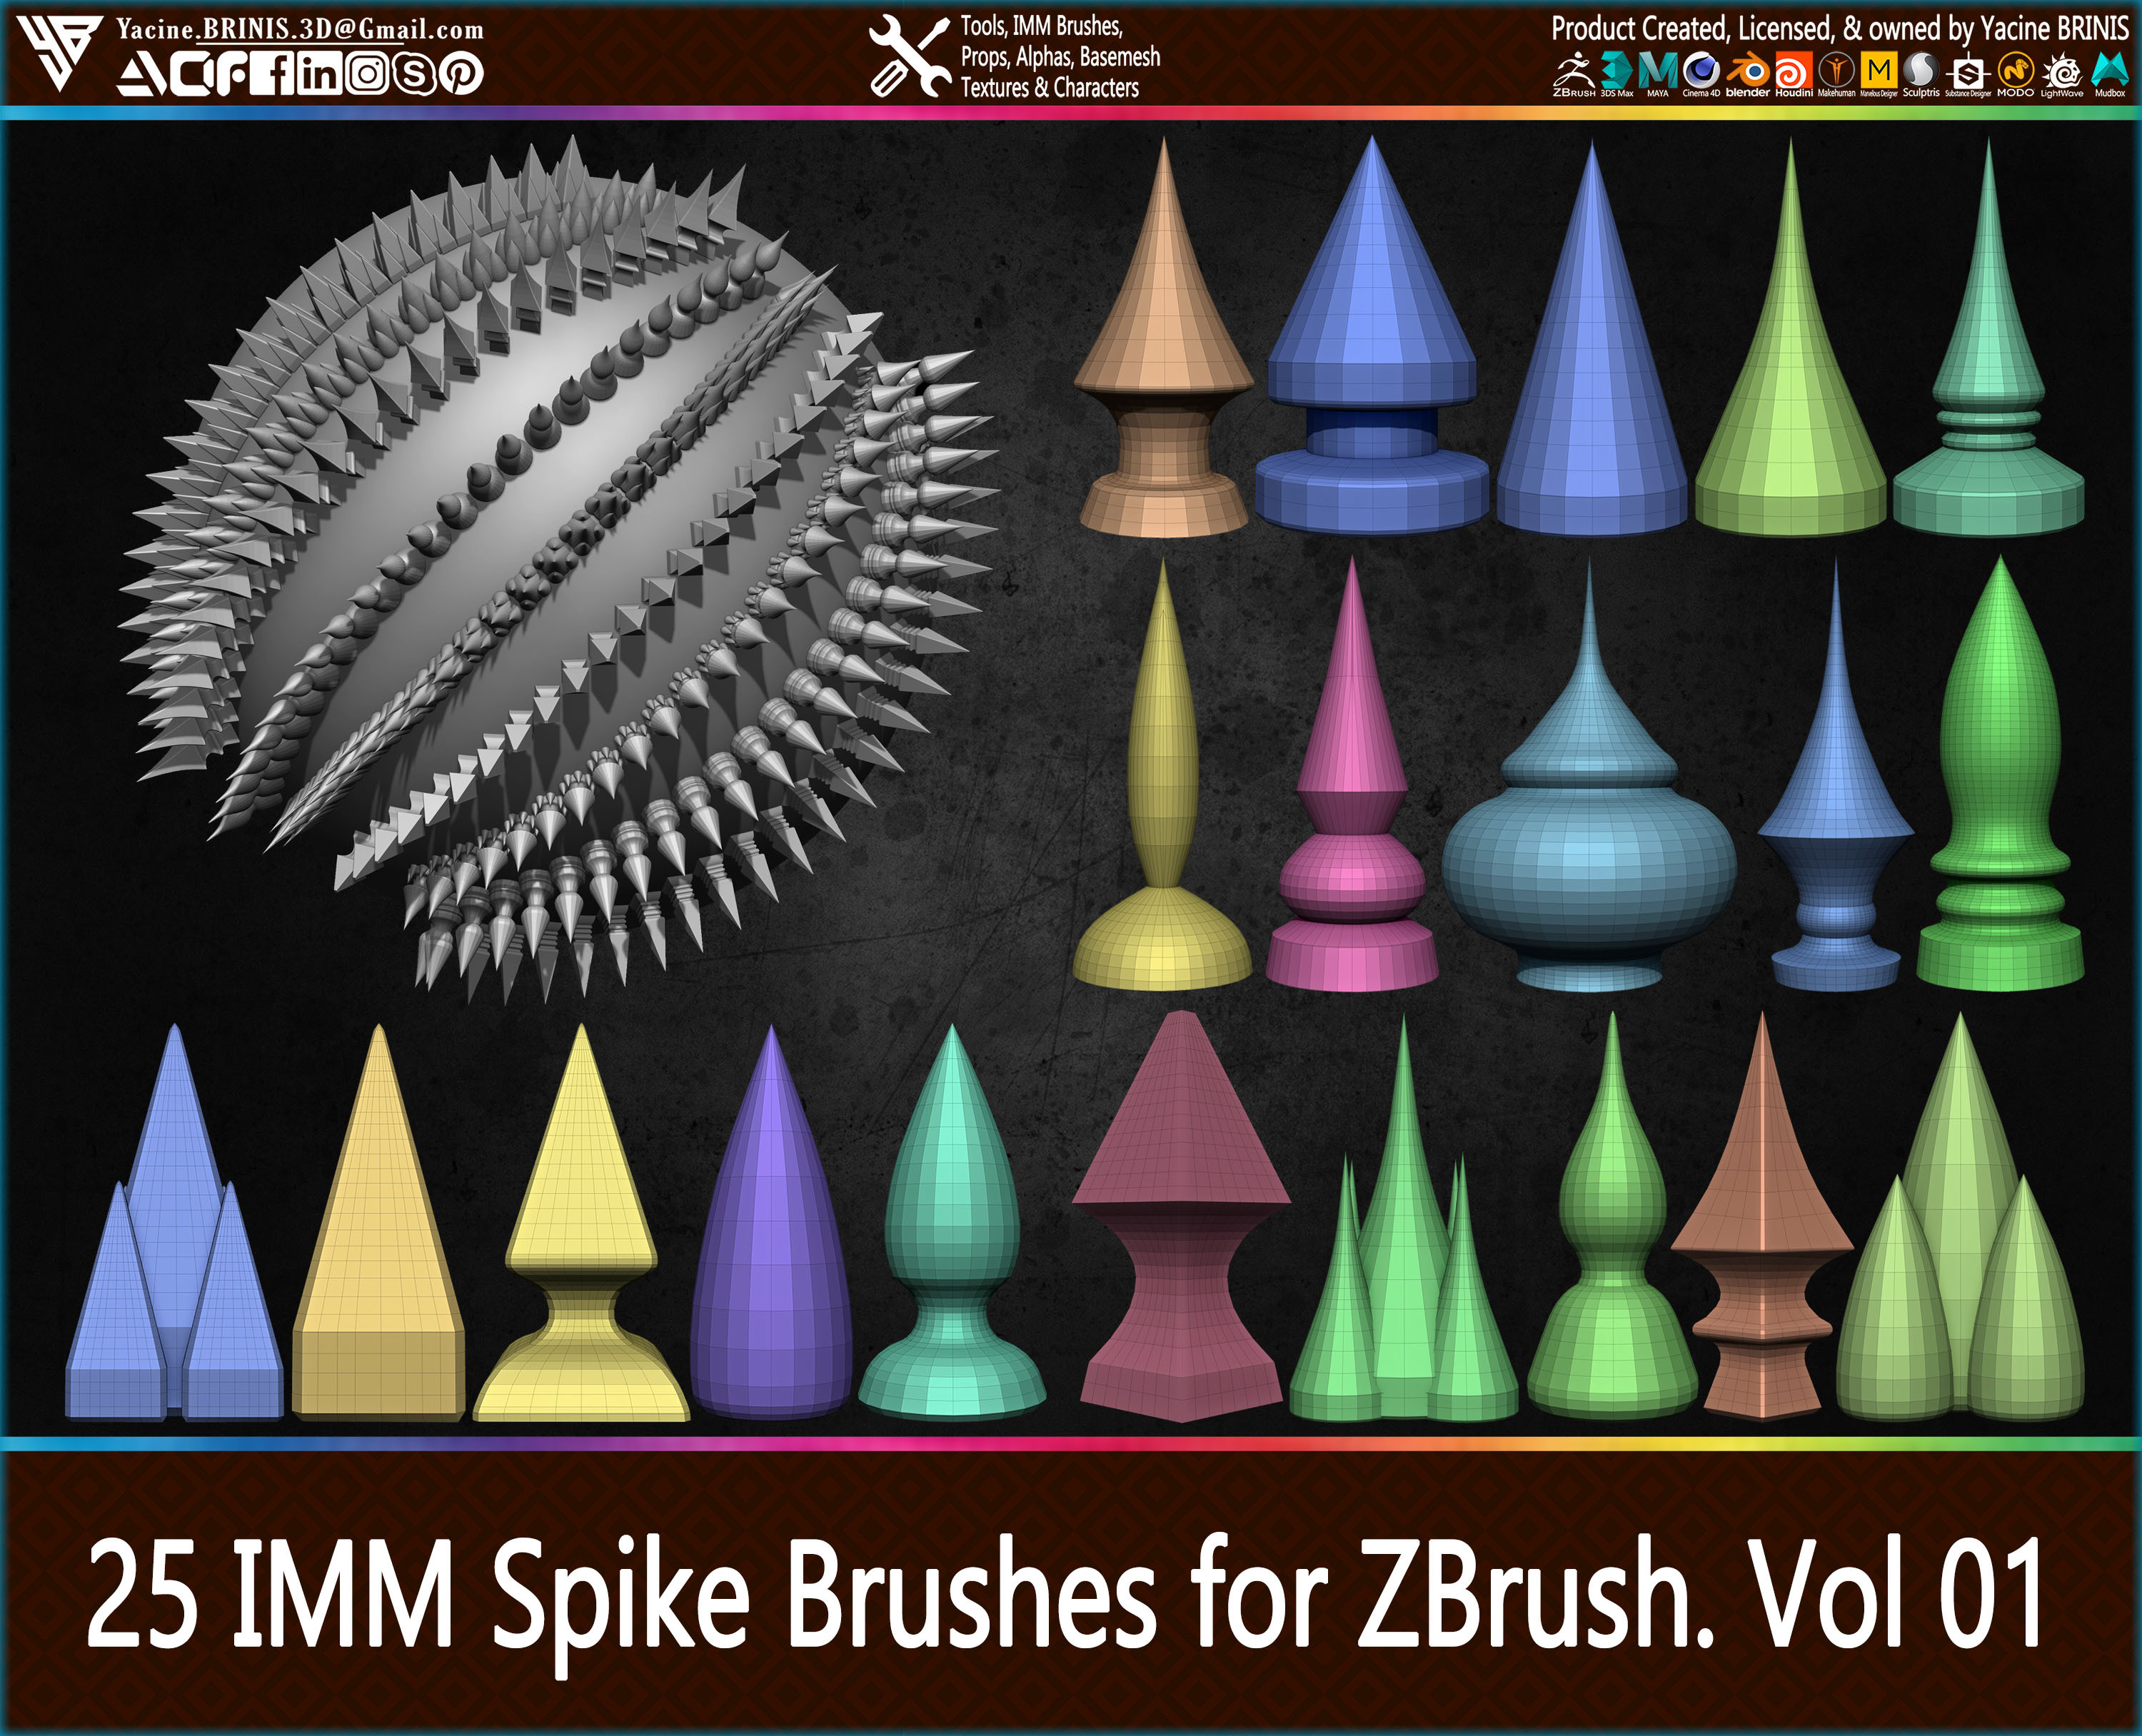 25 imm Spike Brushes for ZBrush By Yacine BRINIS Vol 01 Set 013